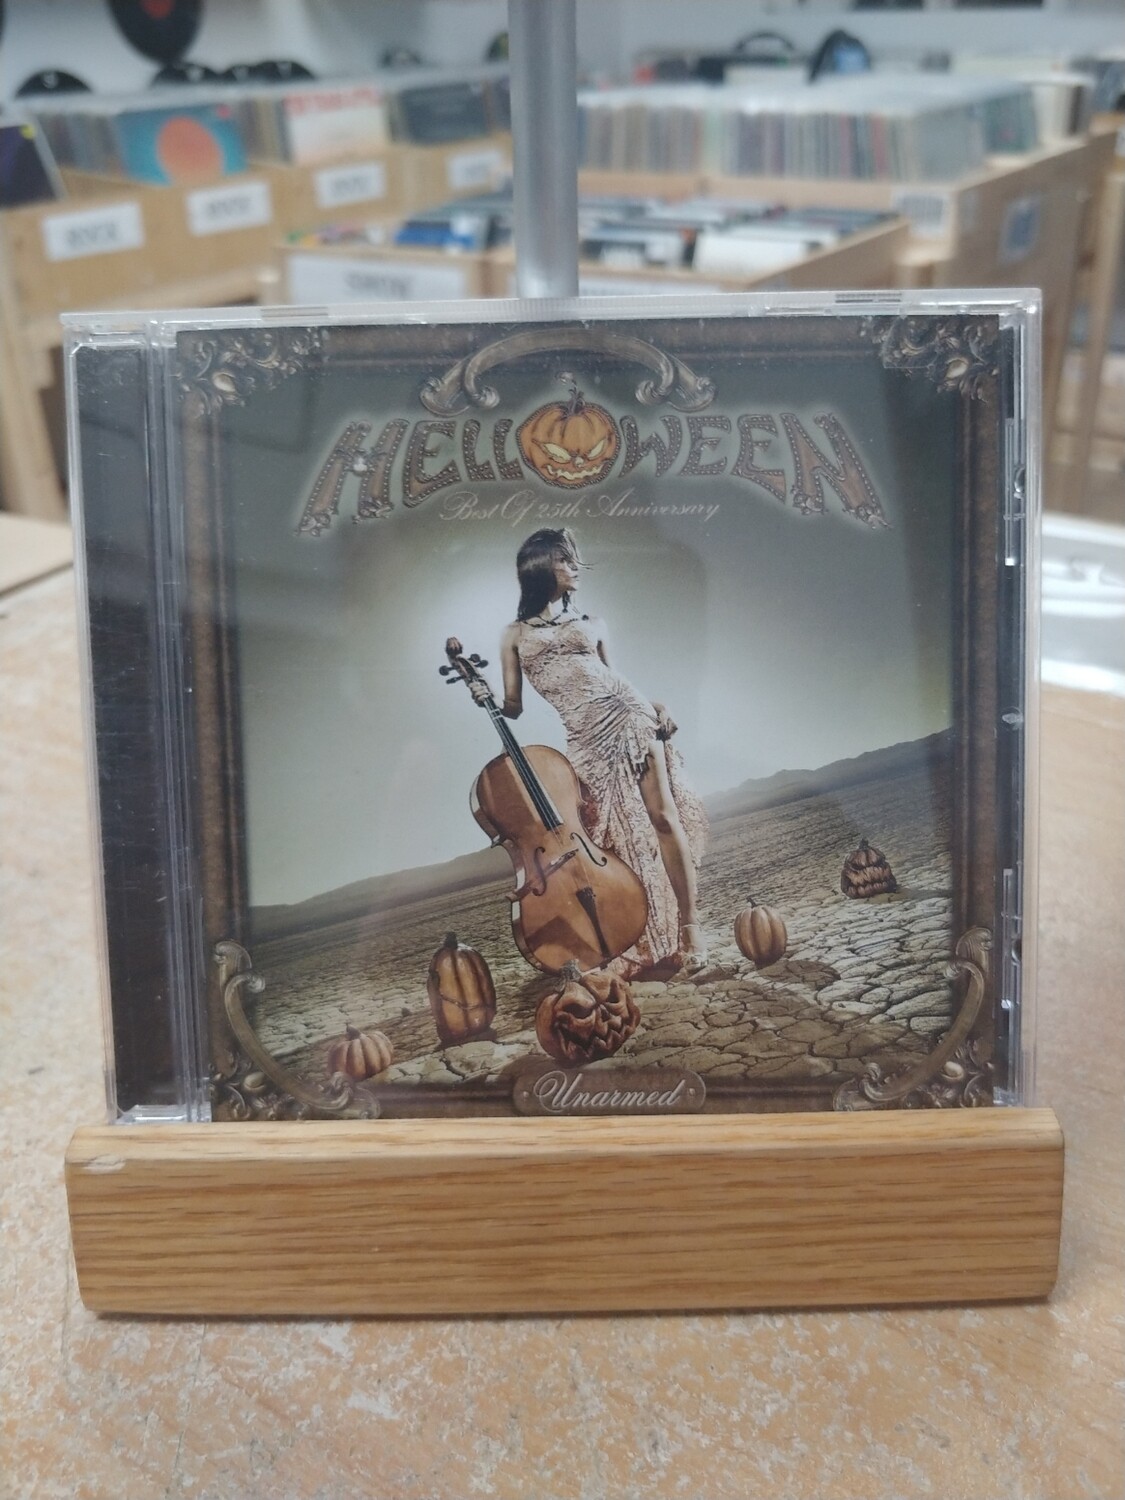 Helloween - Unarmed (CD)